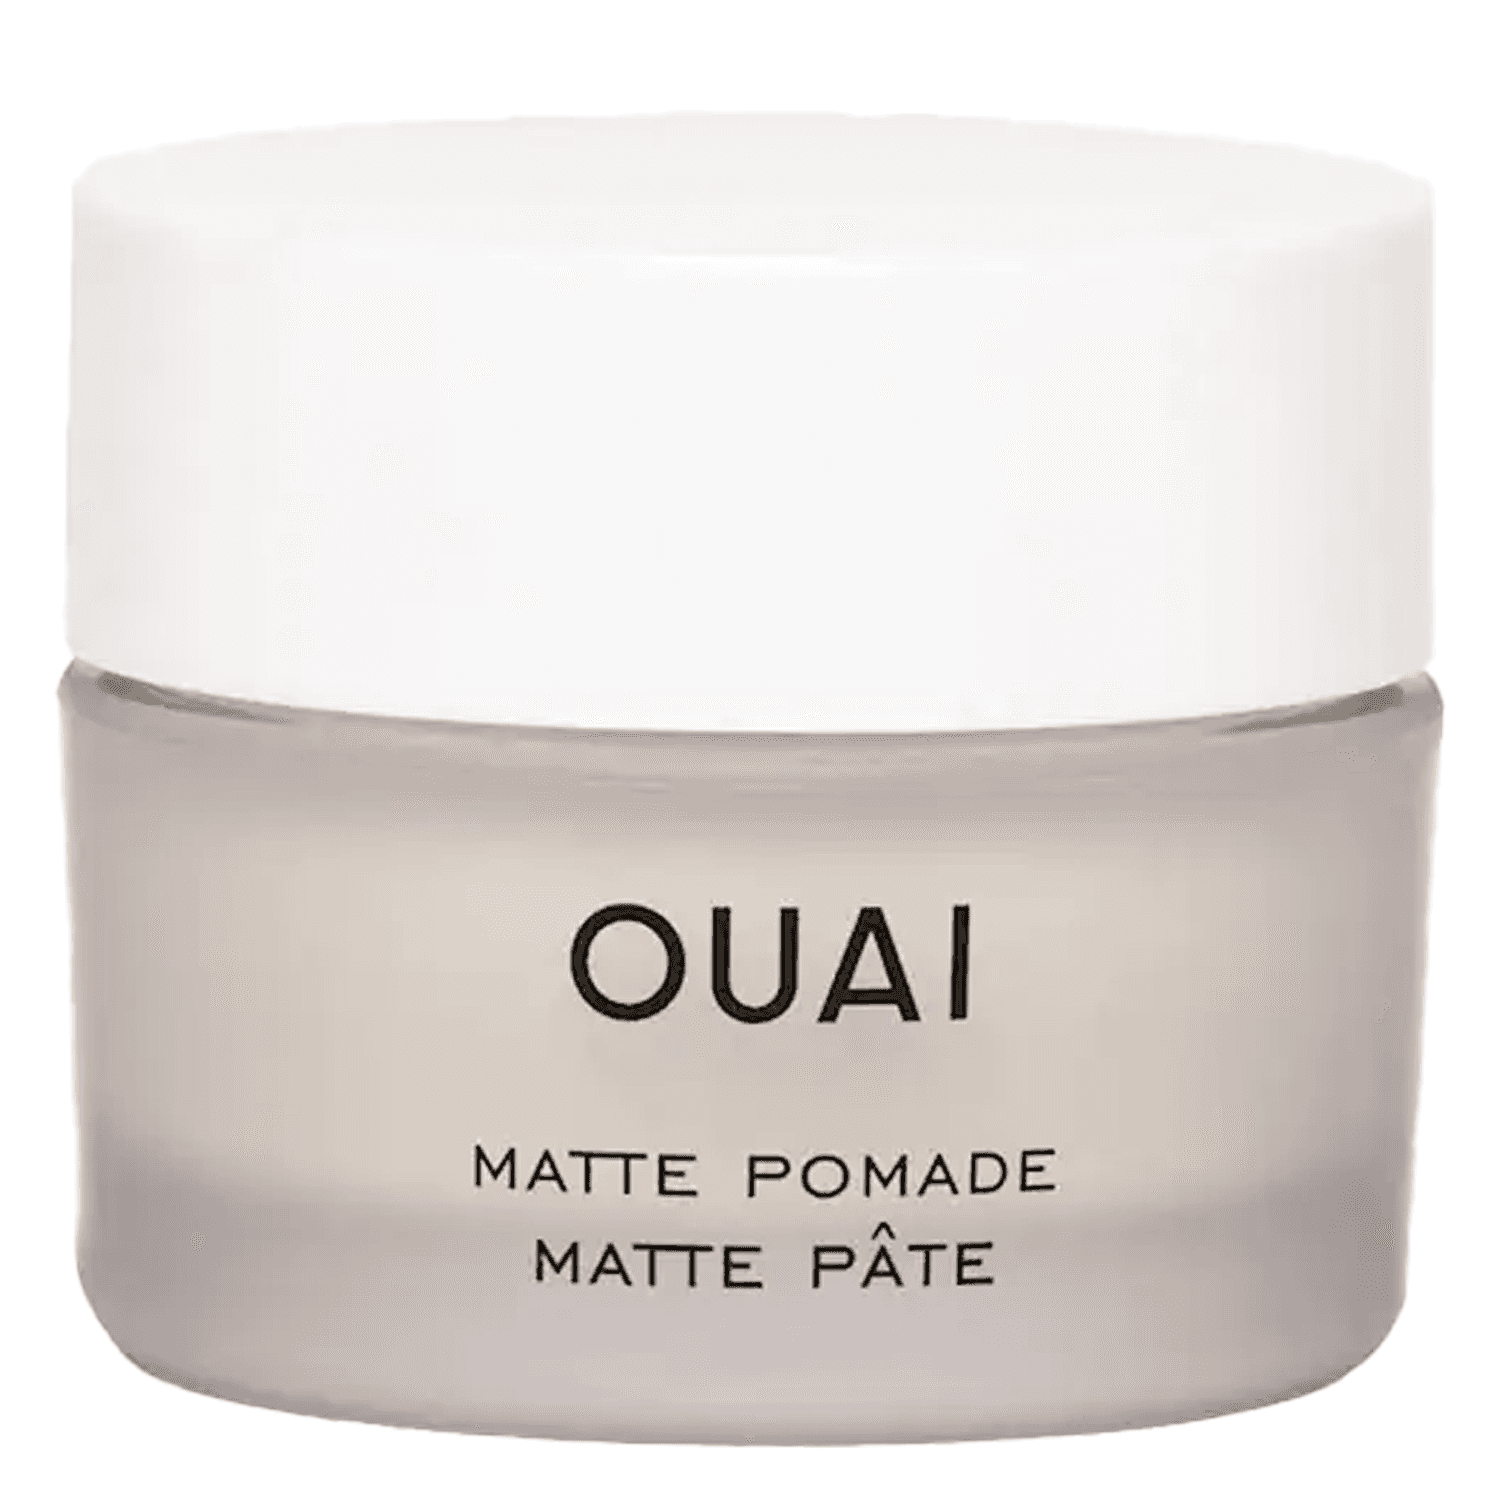 OUAI - Matte Pomade